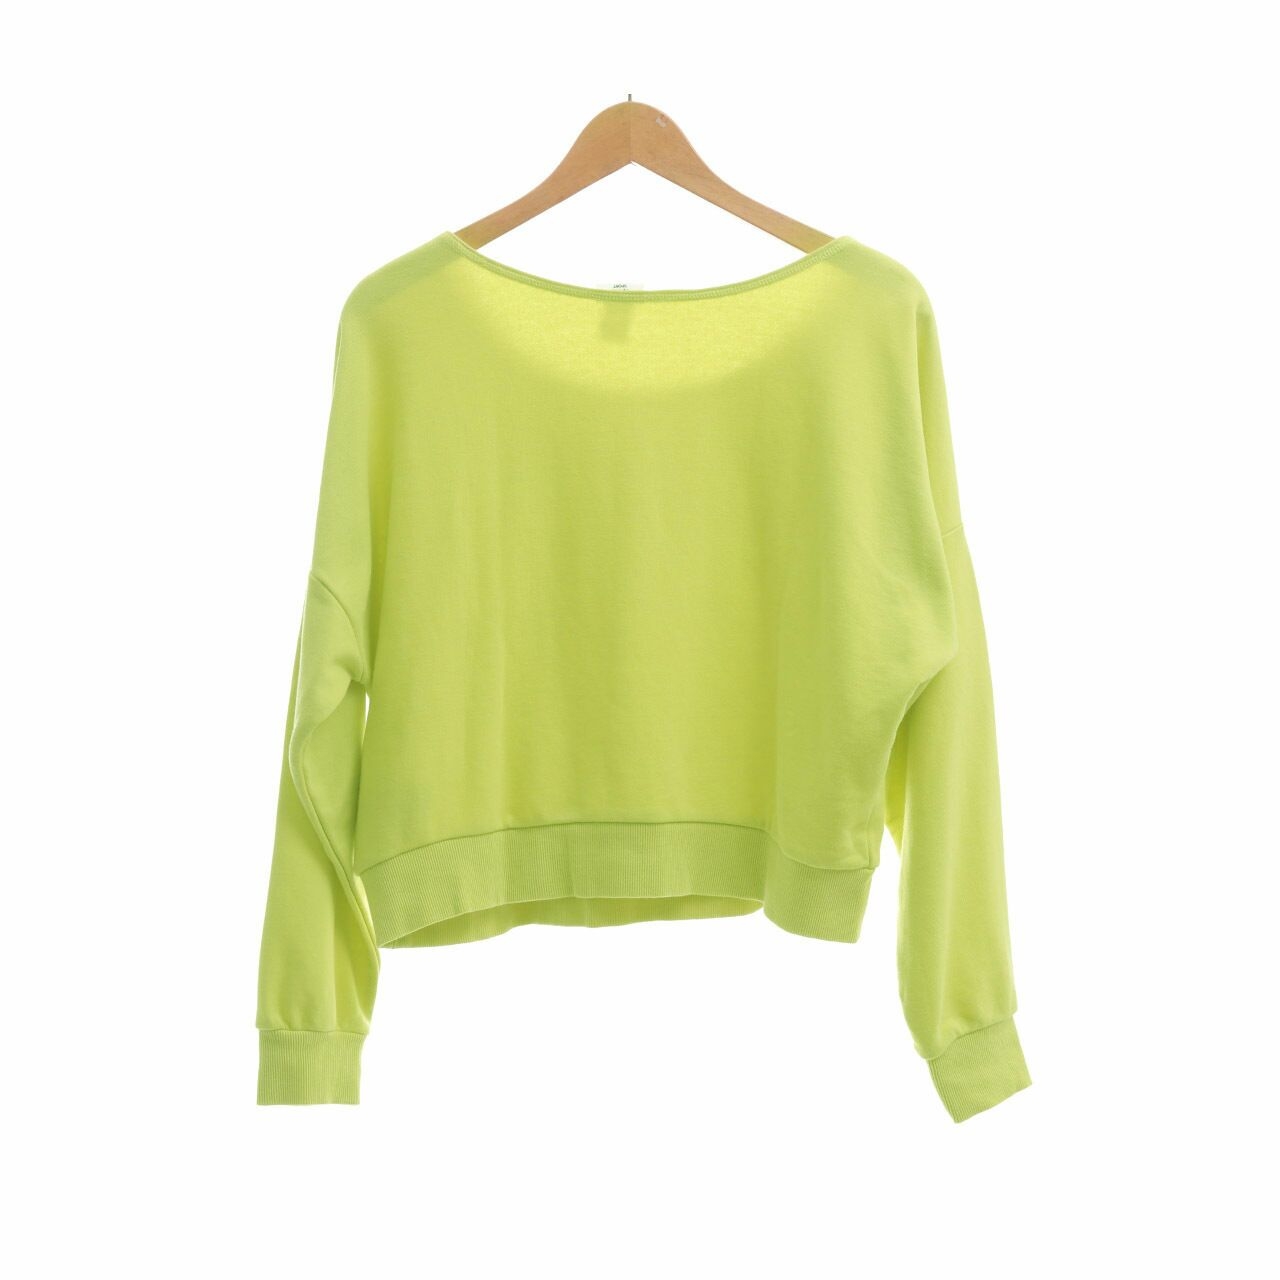 H&M Lime Crop Sweater